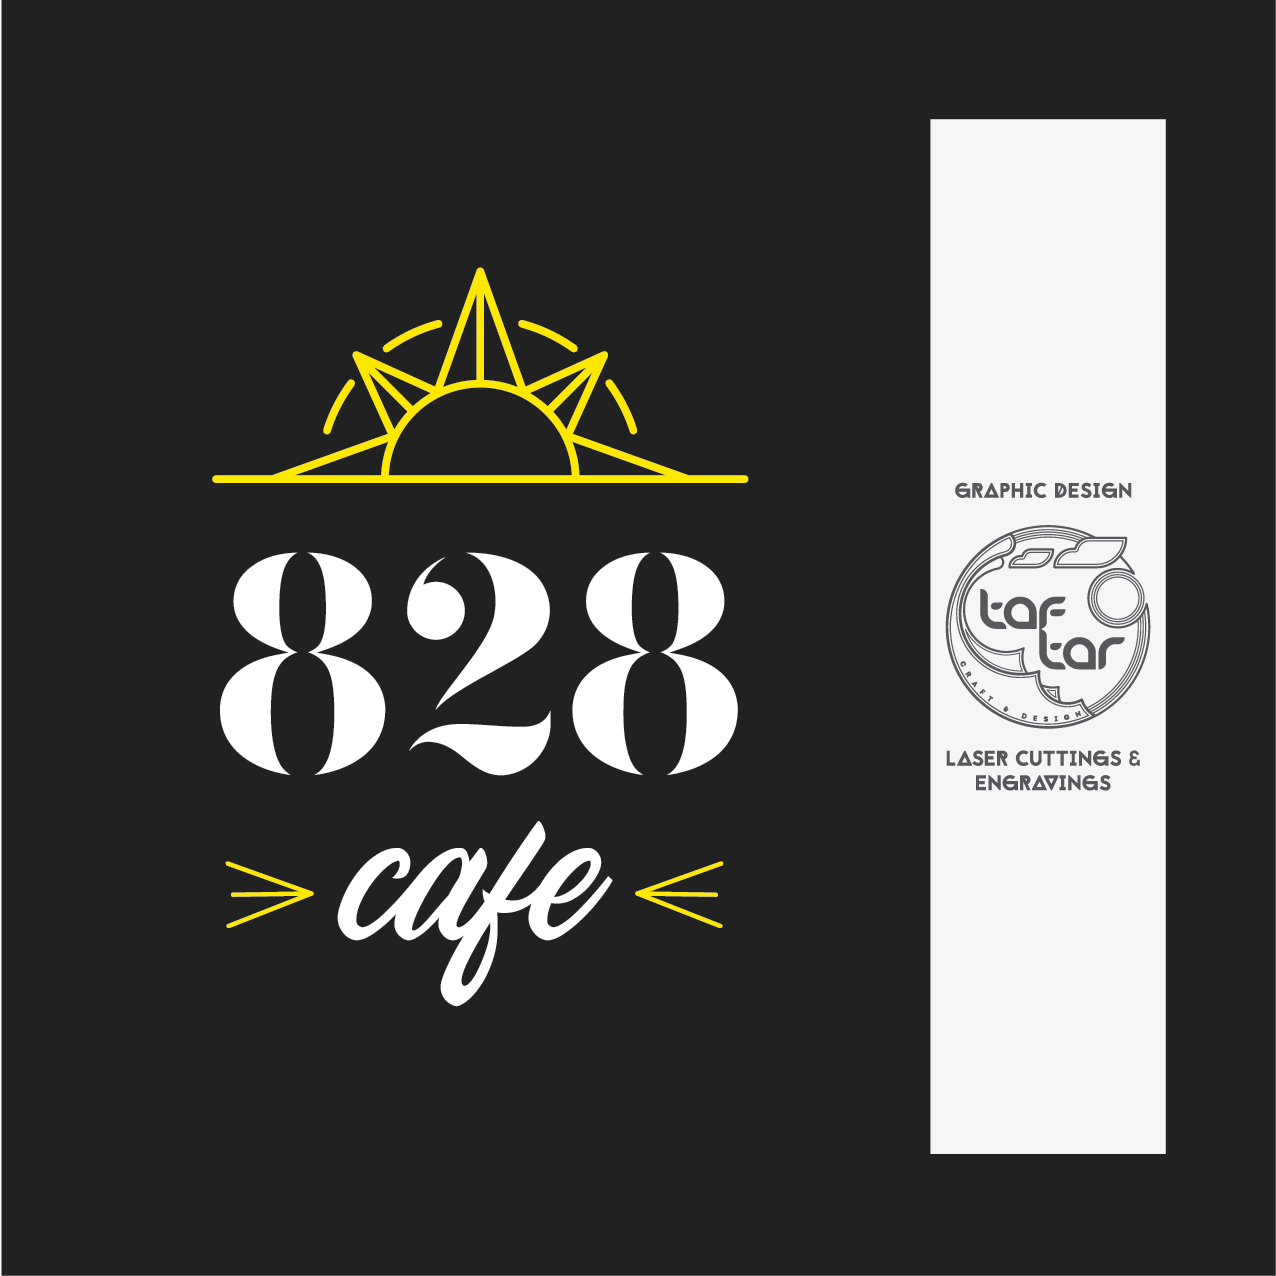 828 Cafe